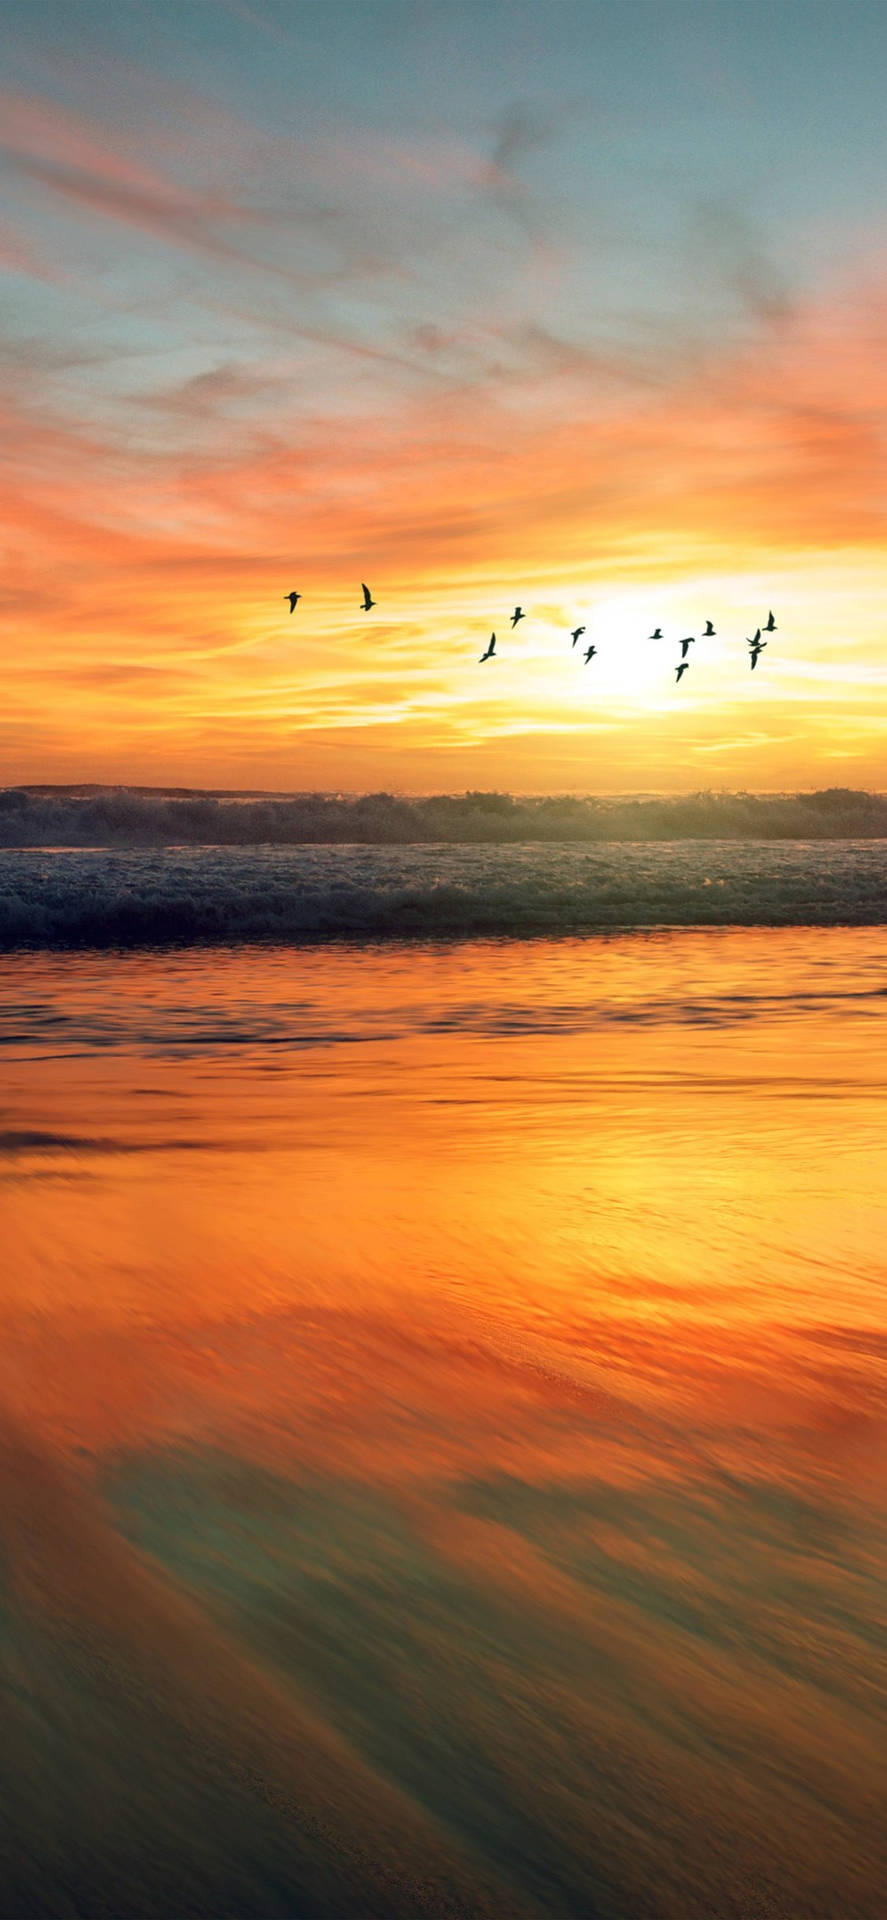 Caption: Majestic Ocean Sunset - Birds soaring against a radiant twilight. Wallpaper